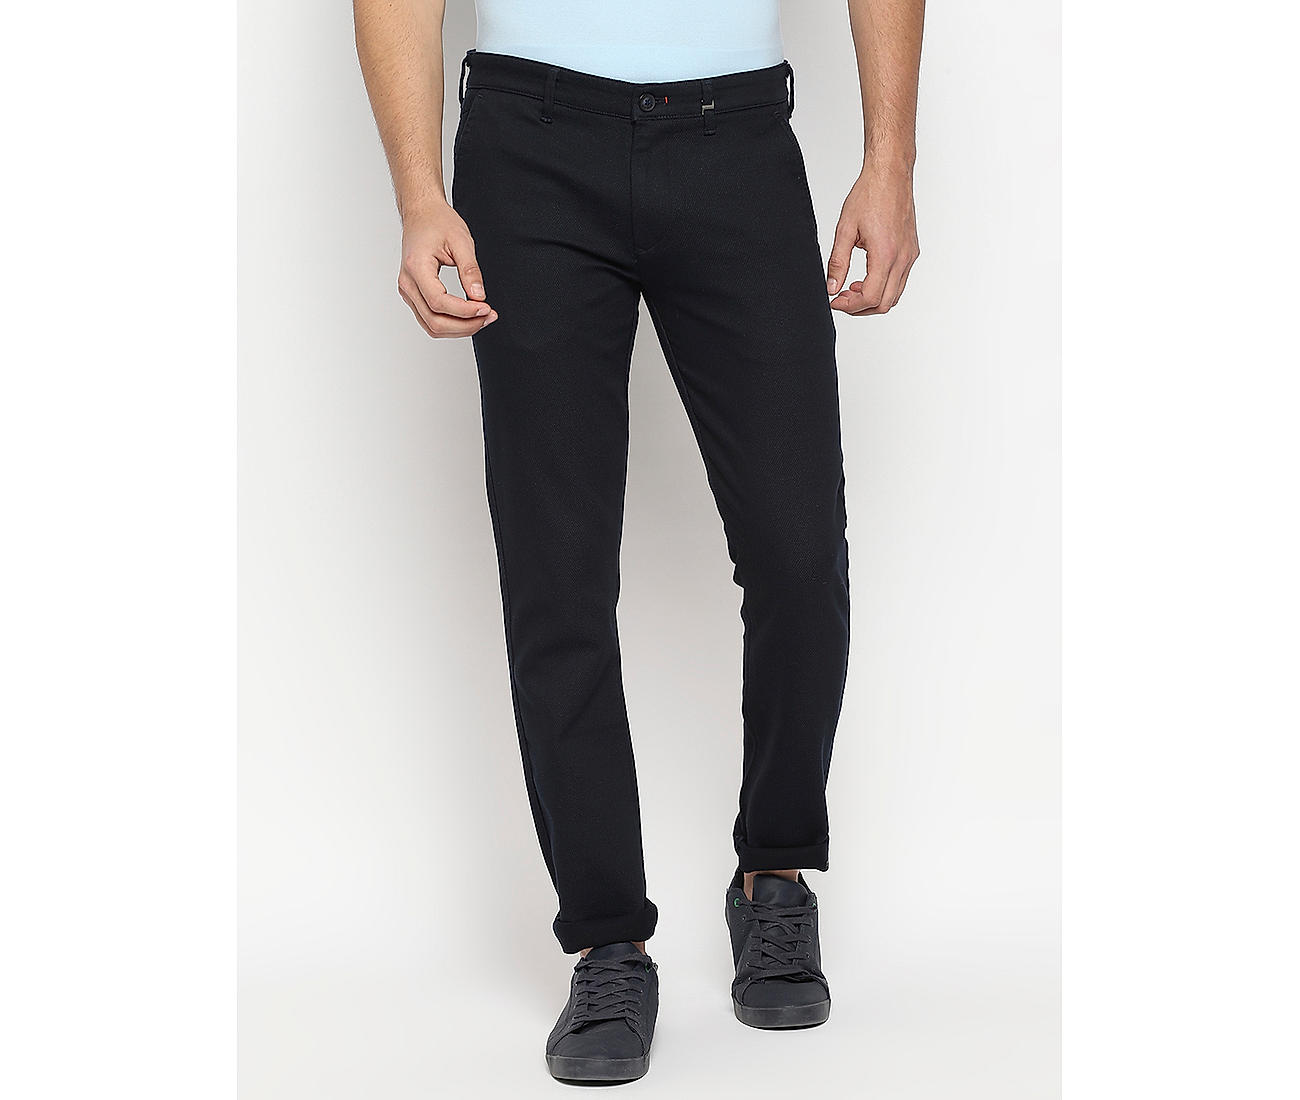 Buy Navy Solid Slim Fit Trousers for Men Online at Killer Jeans | 471584